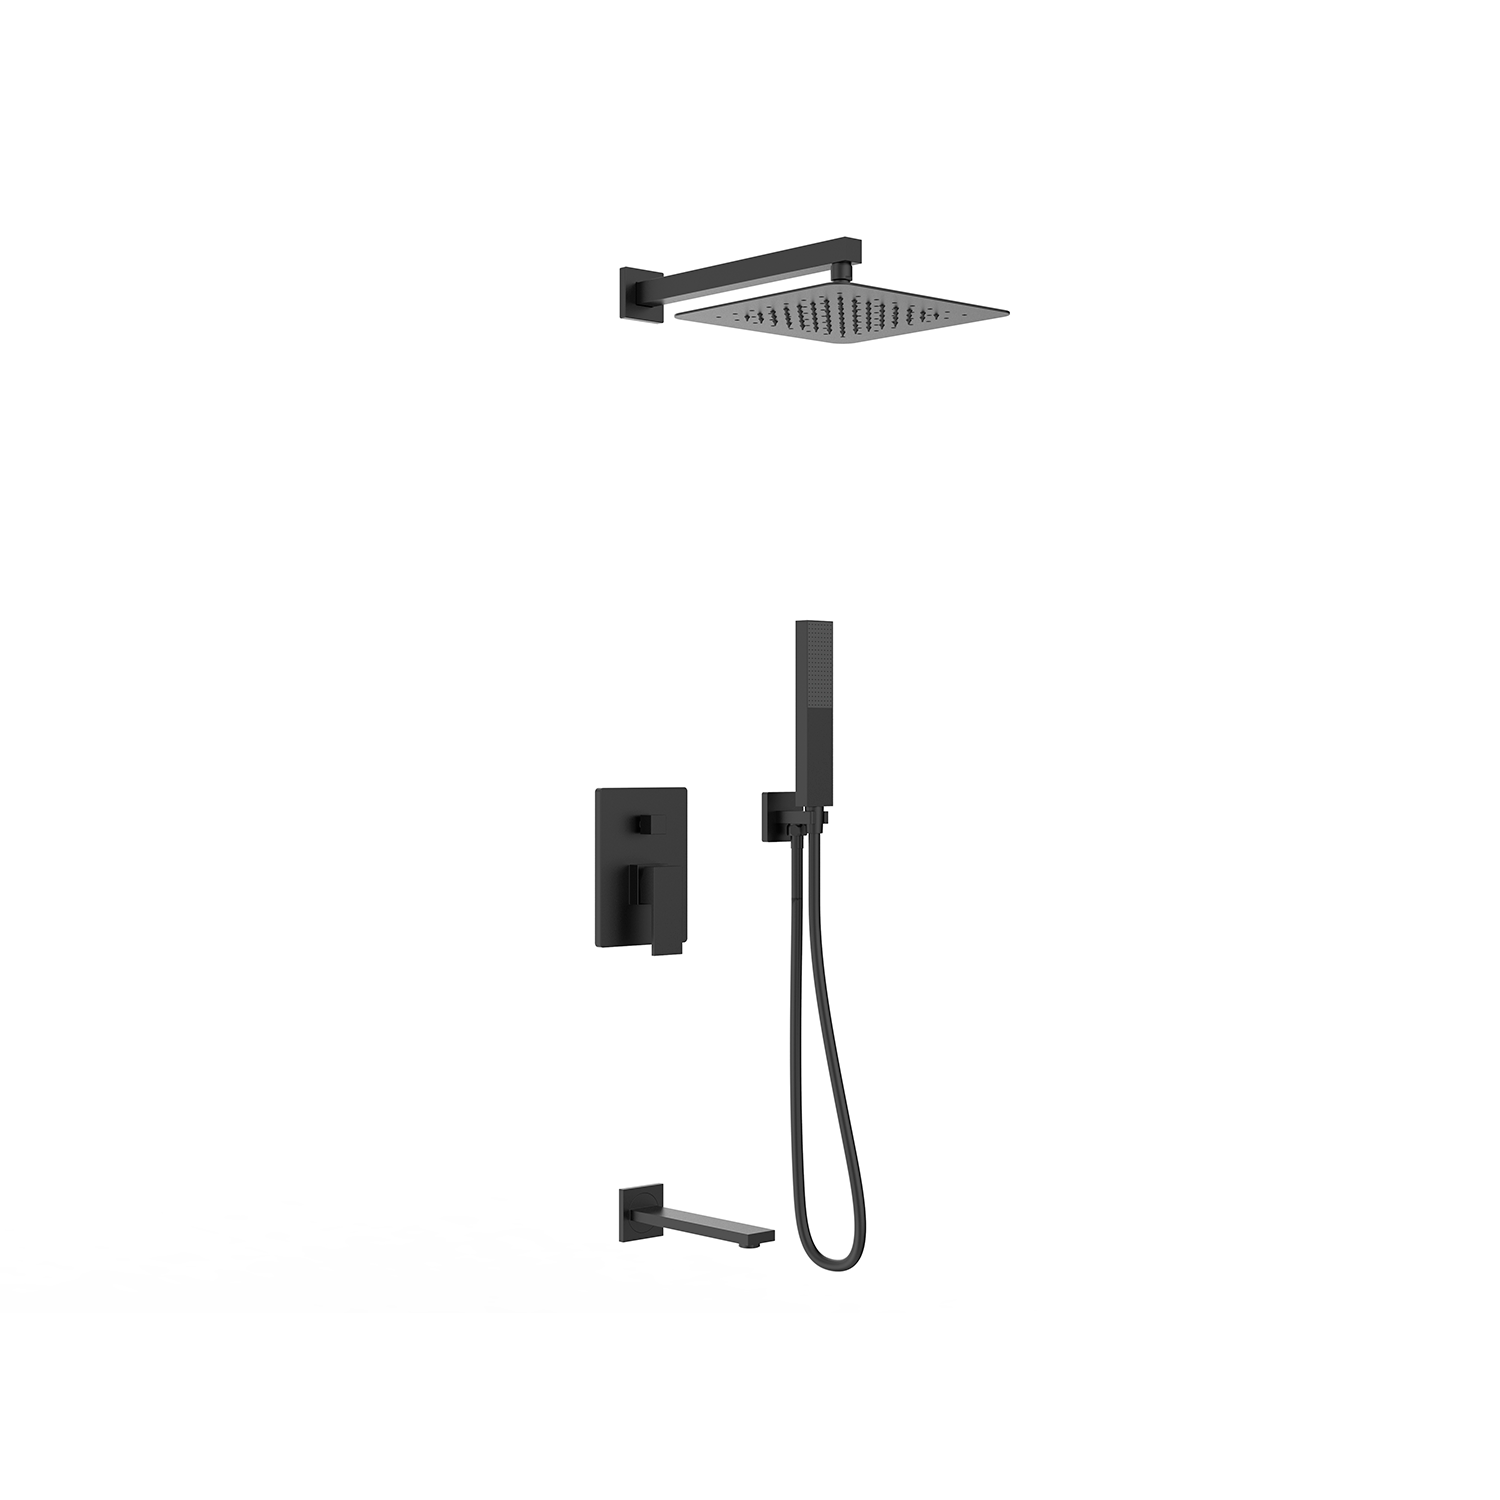 DAX Square 3 Way Shower System with Hand Shower Matt Black Finish (DAX-6563A-BL)